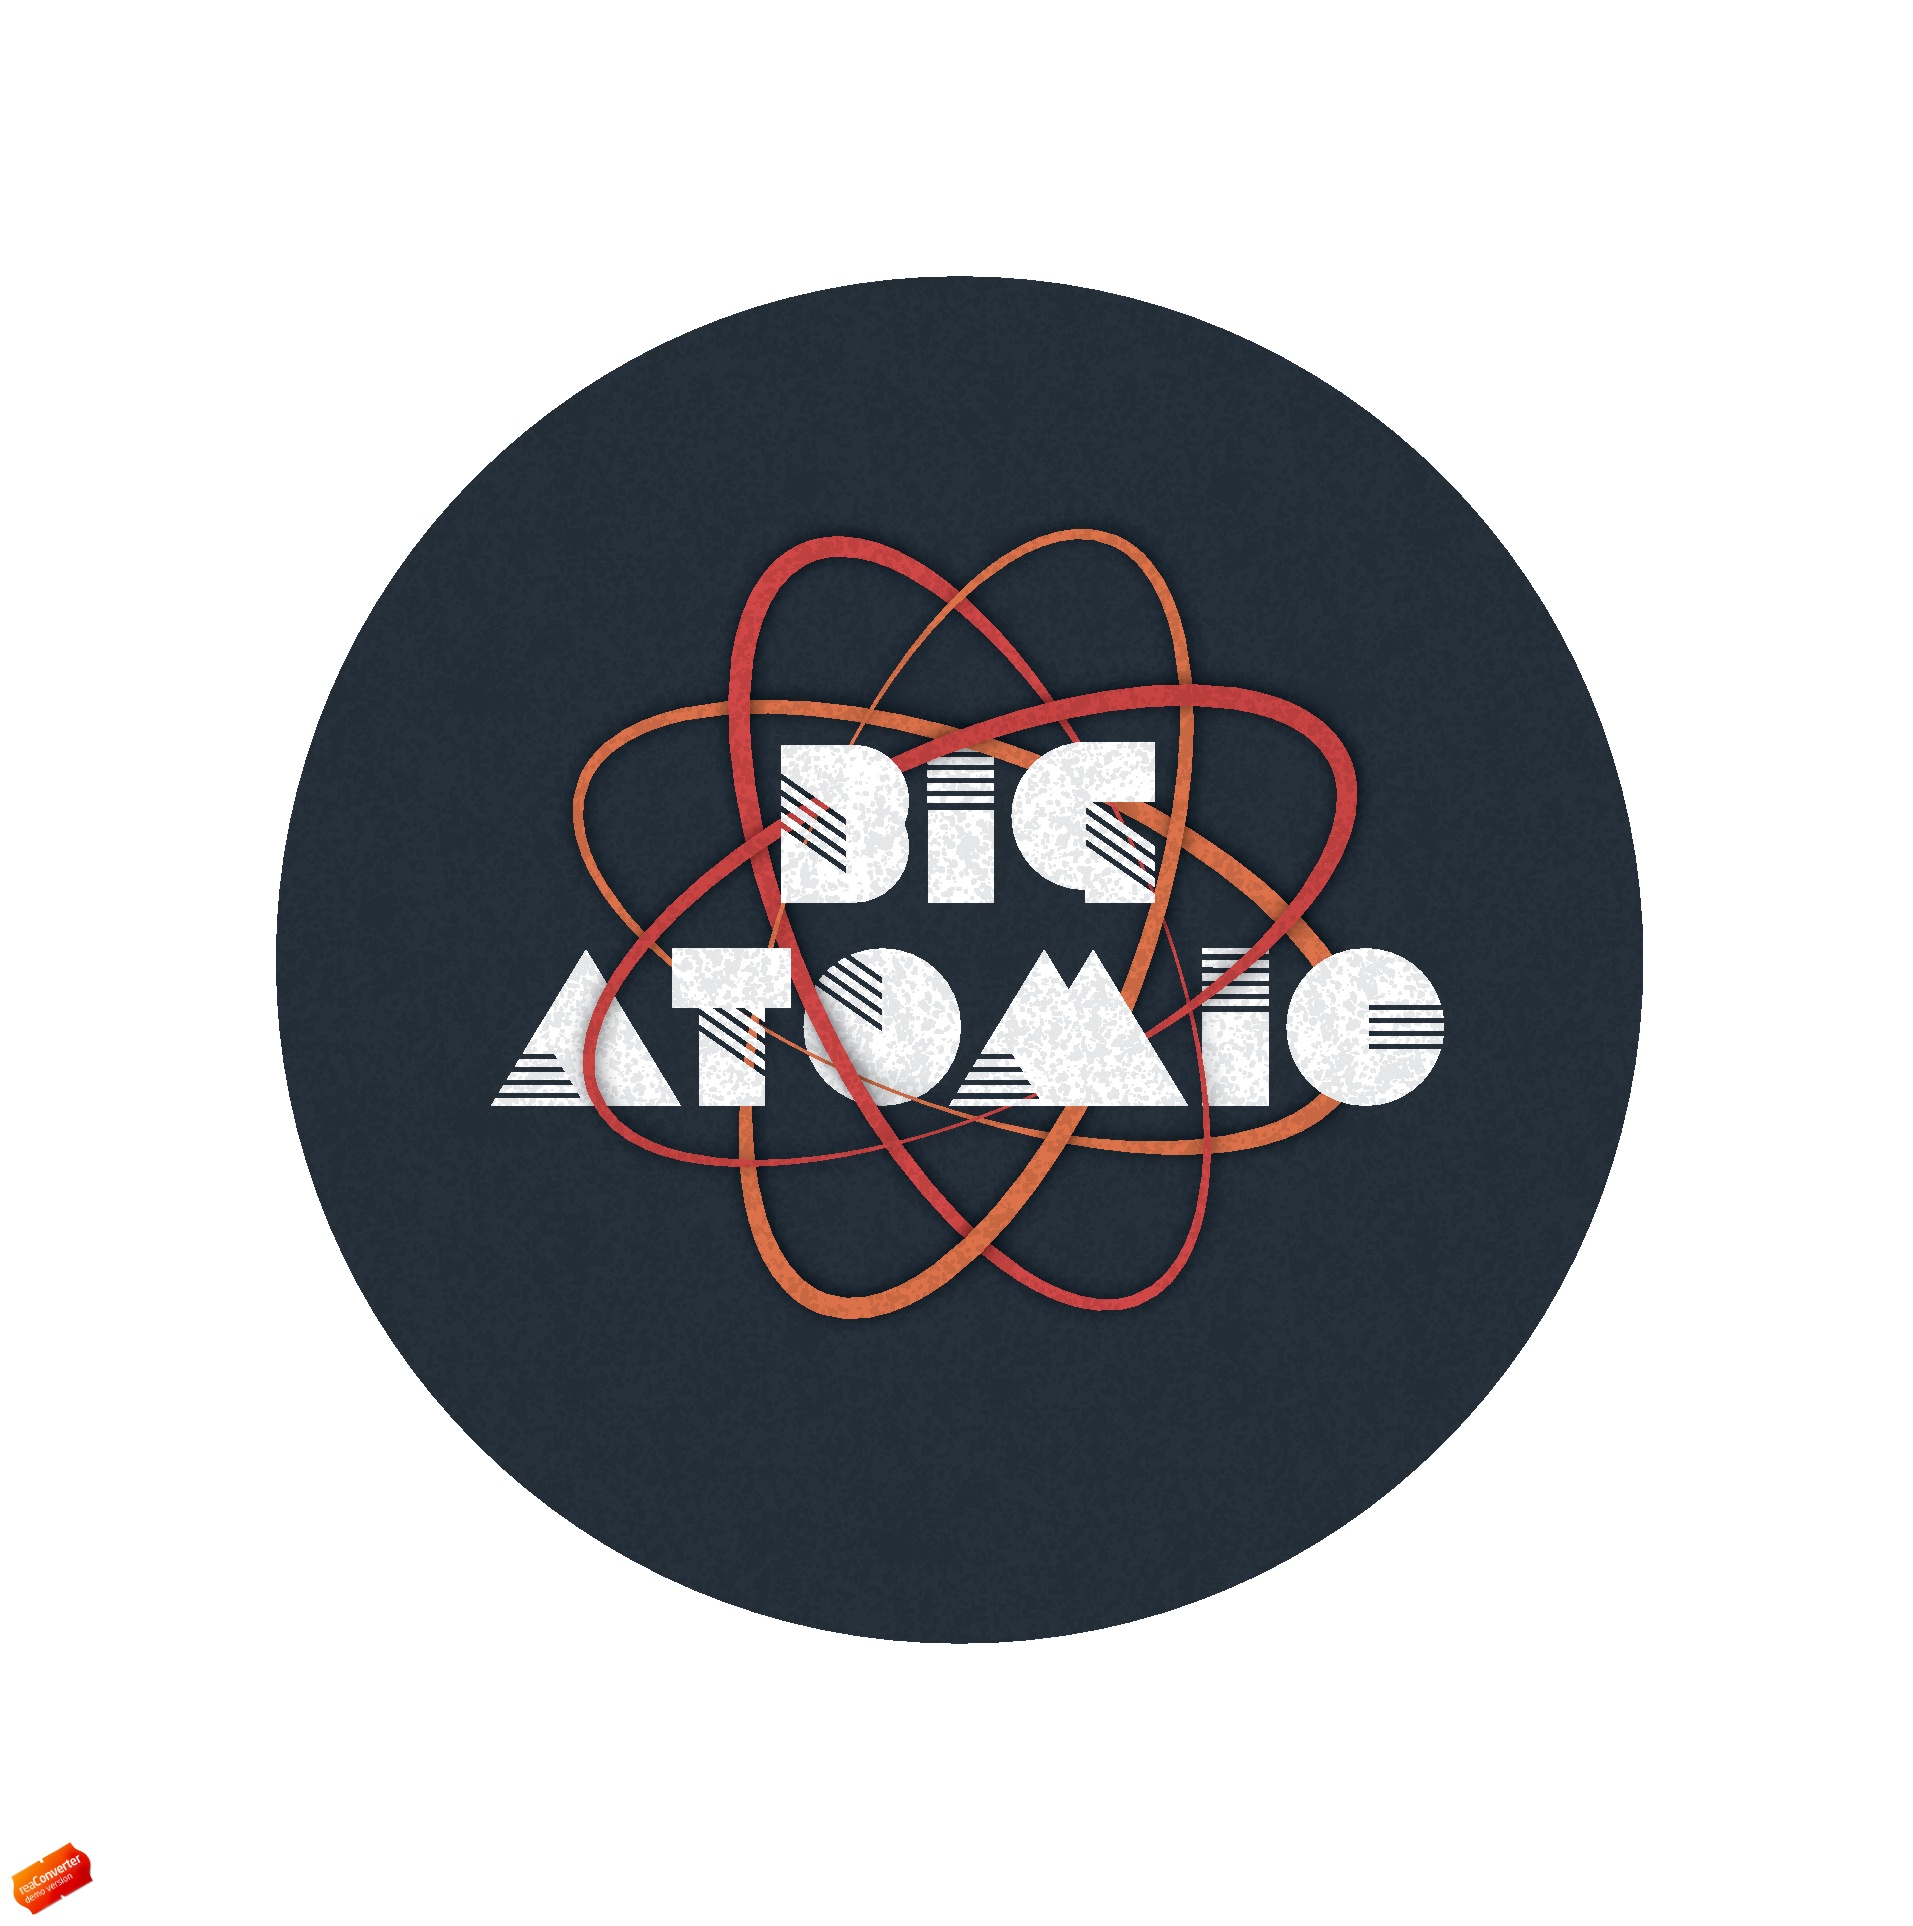 www.big-atomic.com